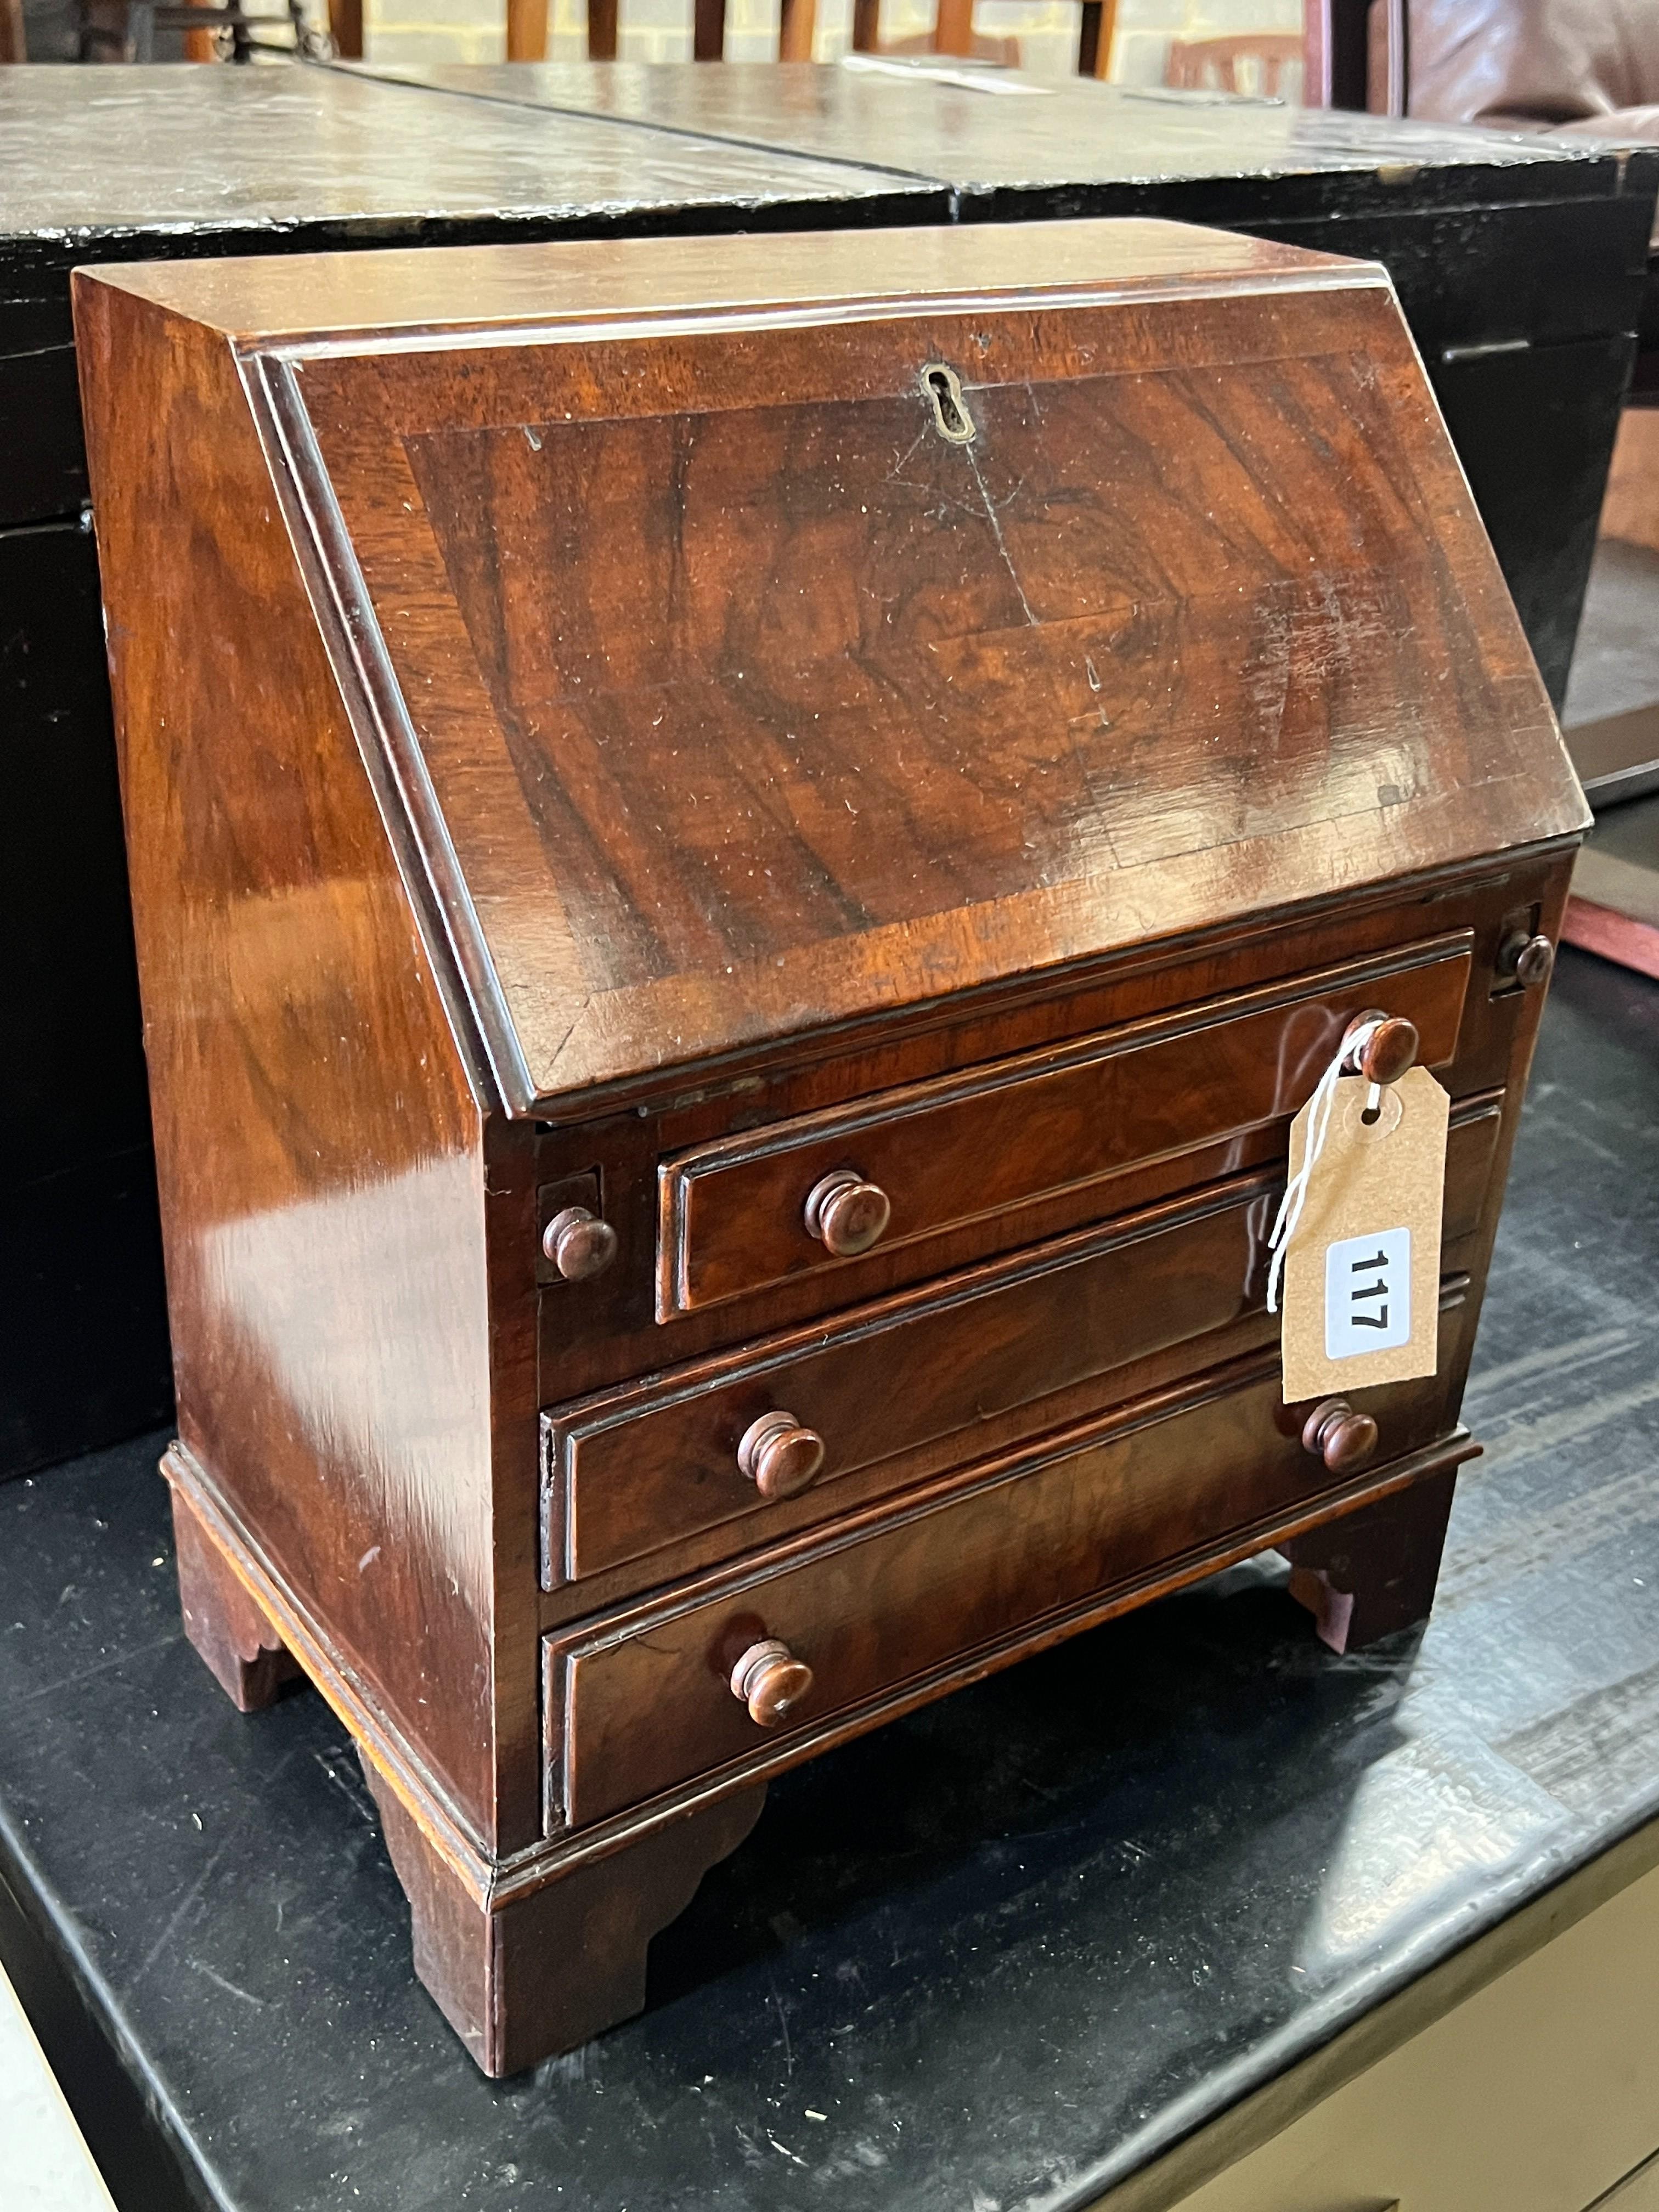 A miniature George III style banded mahogany bureau, width 31cm, depth 19cm, height 36cm